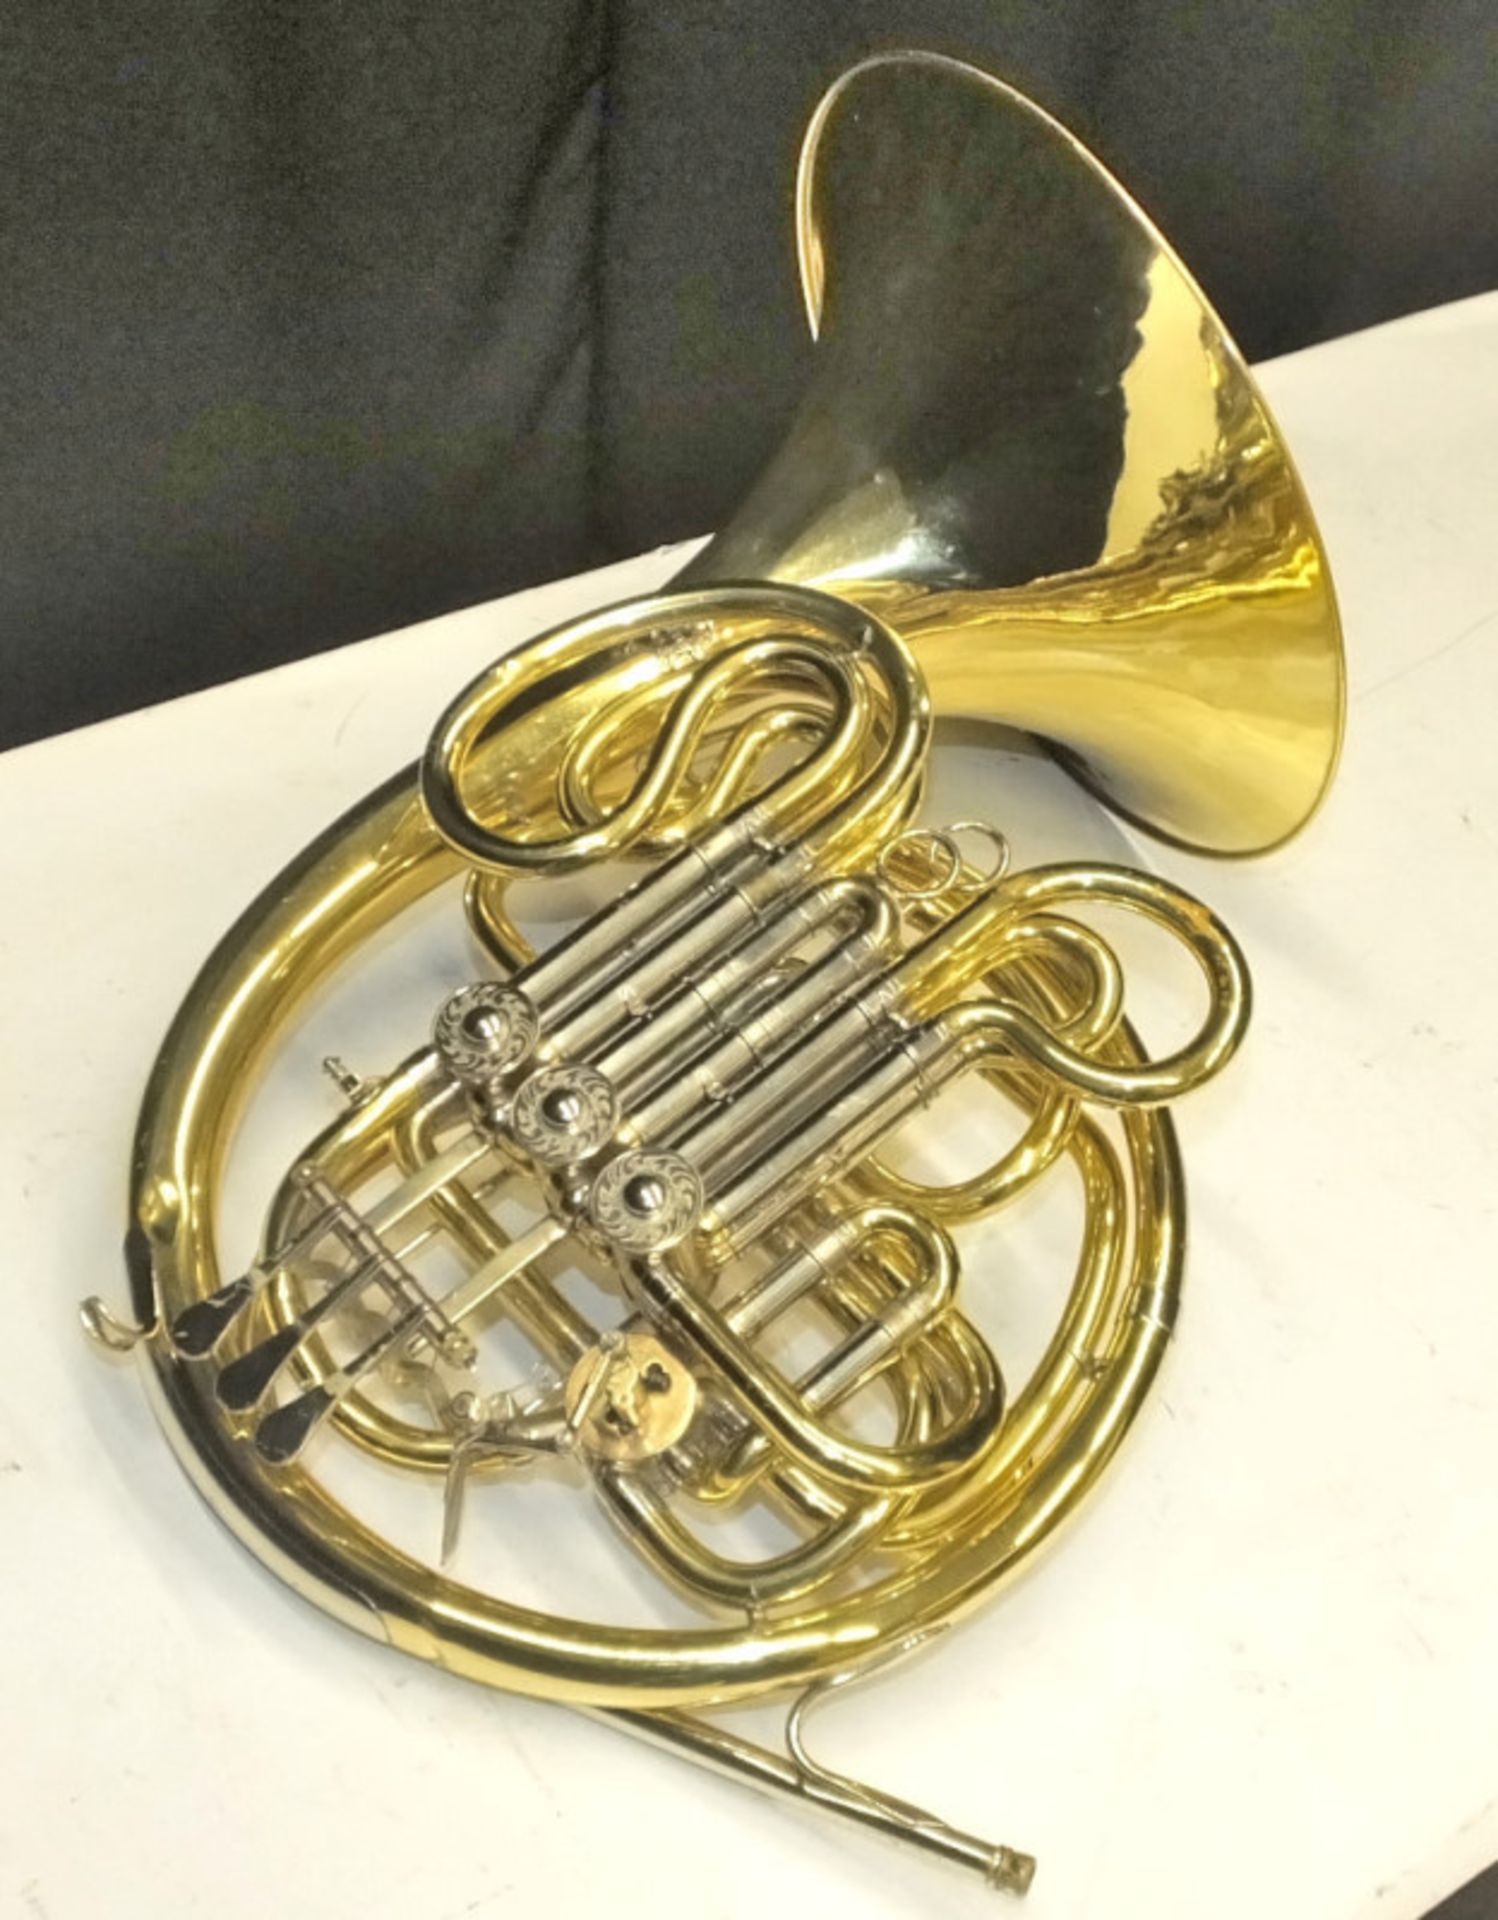 Gebr Alexander Mainz Mod 103 French Horn in case - Serial Number - 18408. - Image 3 of 18